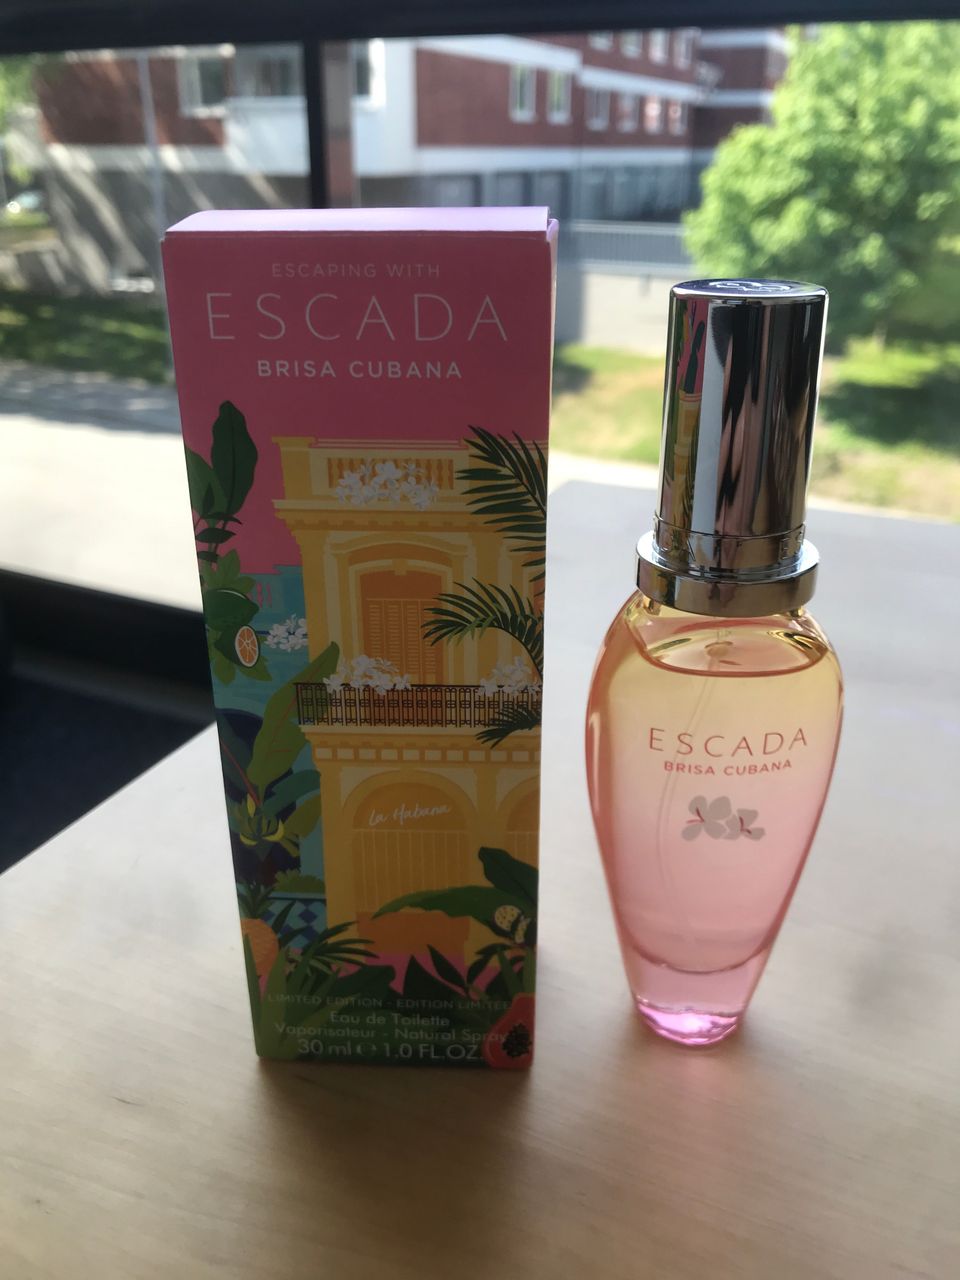 Escada limited edition 30ml hajuvesi tuoksu